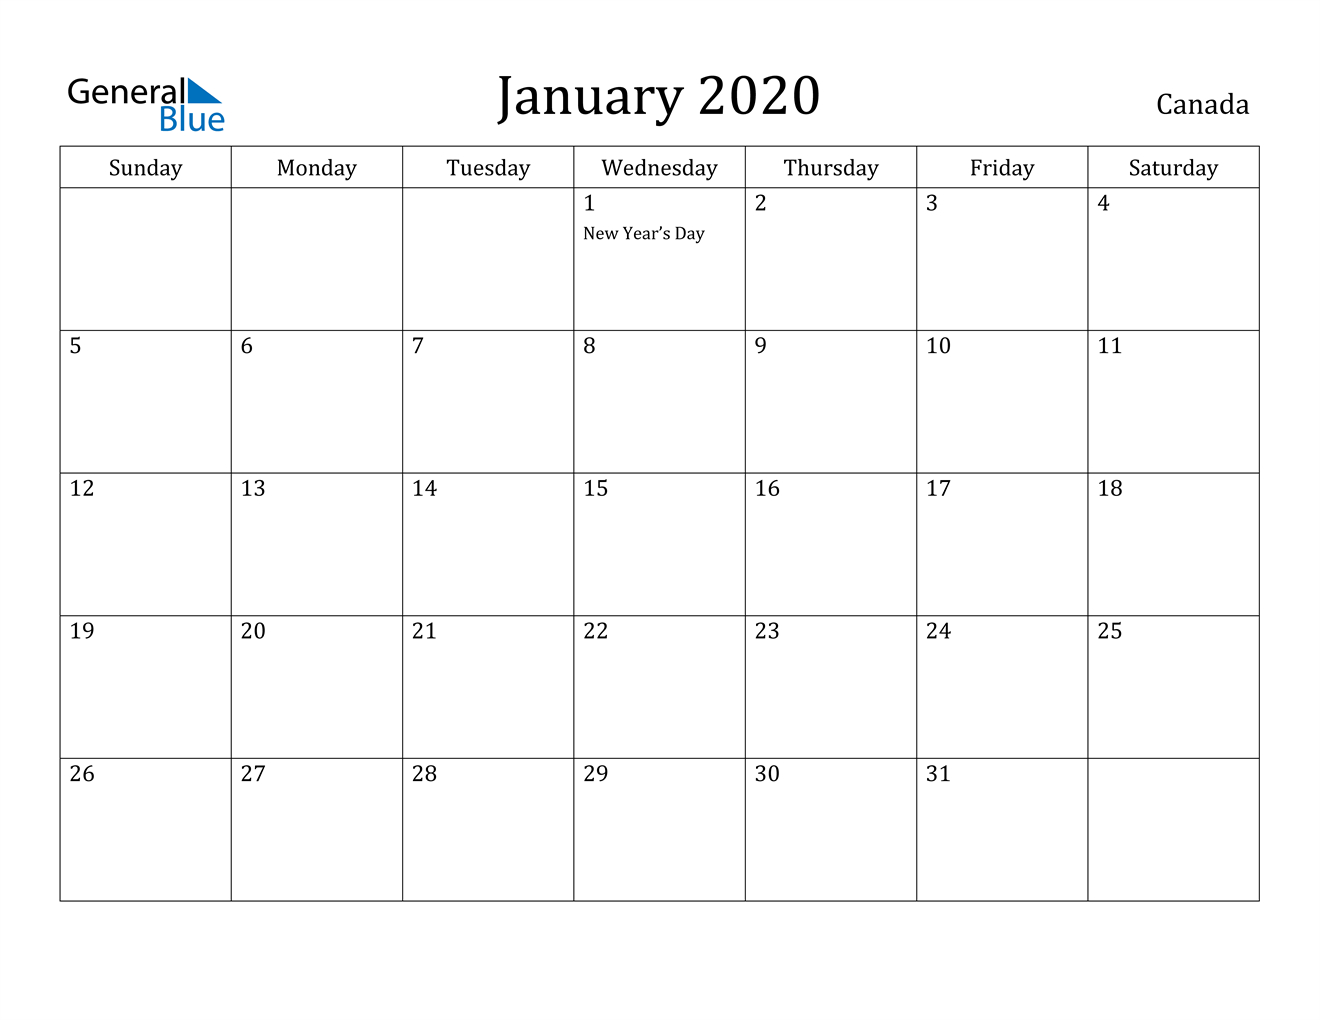 January 2020 Calendar - Canada